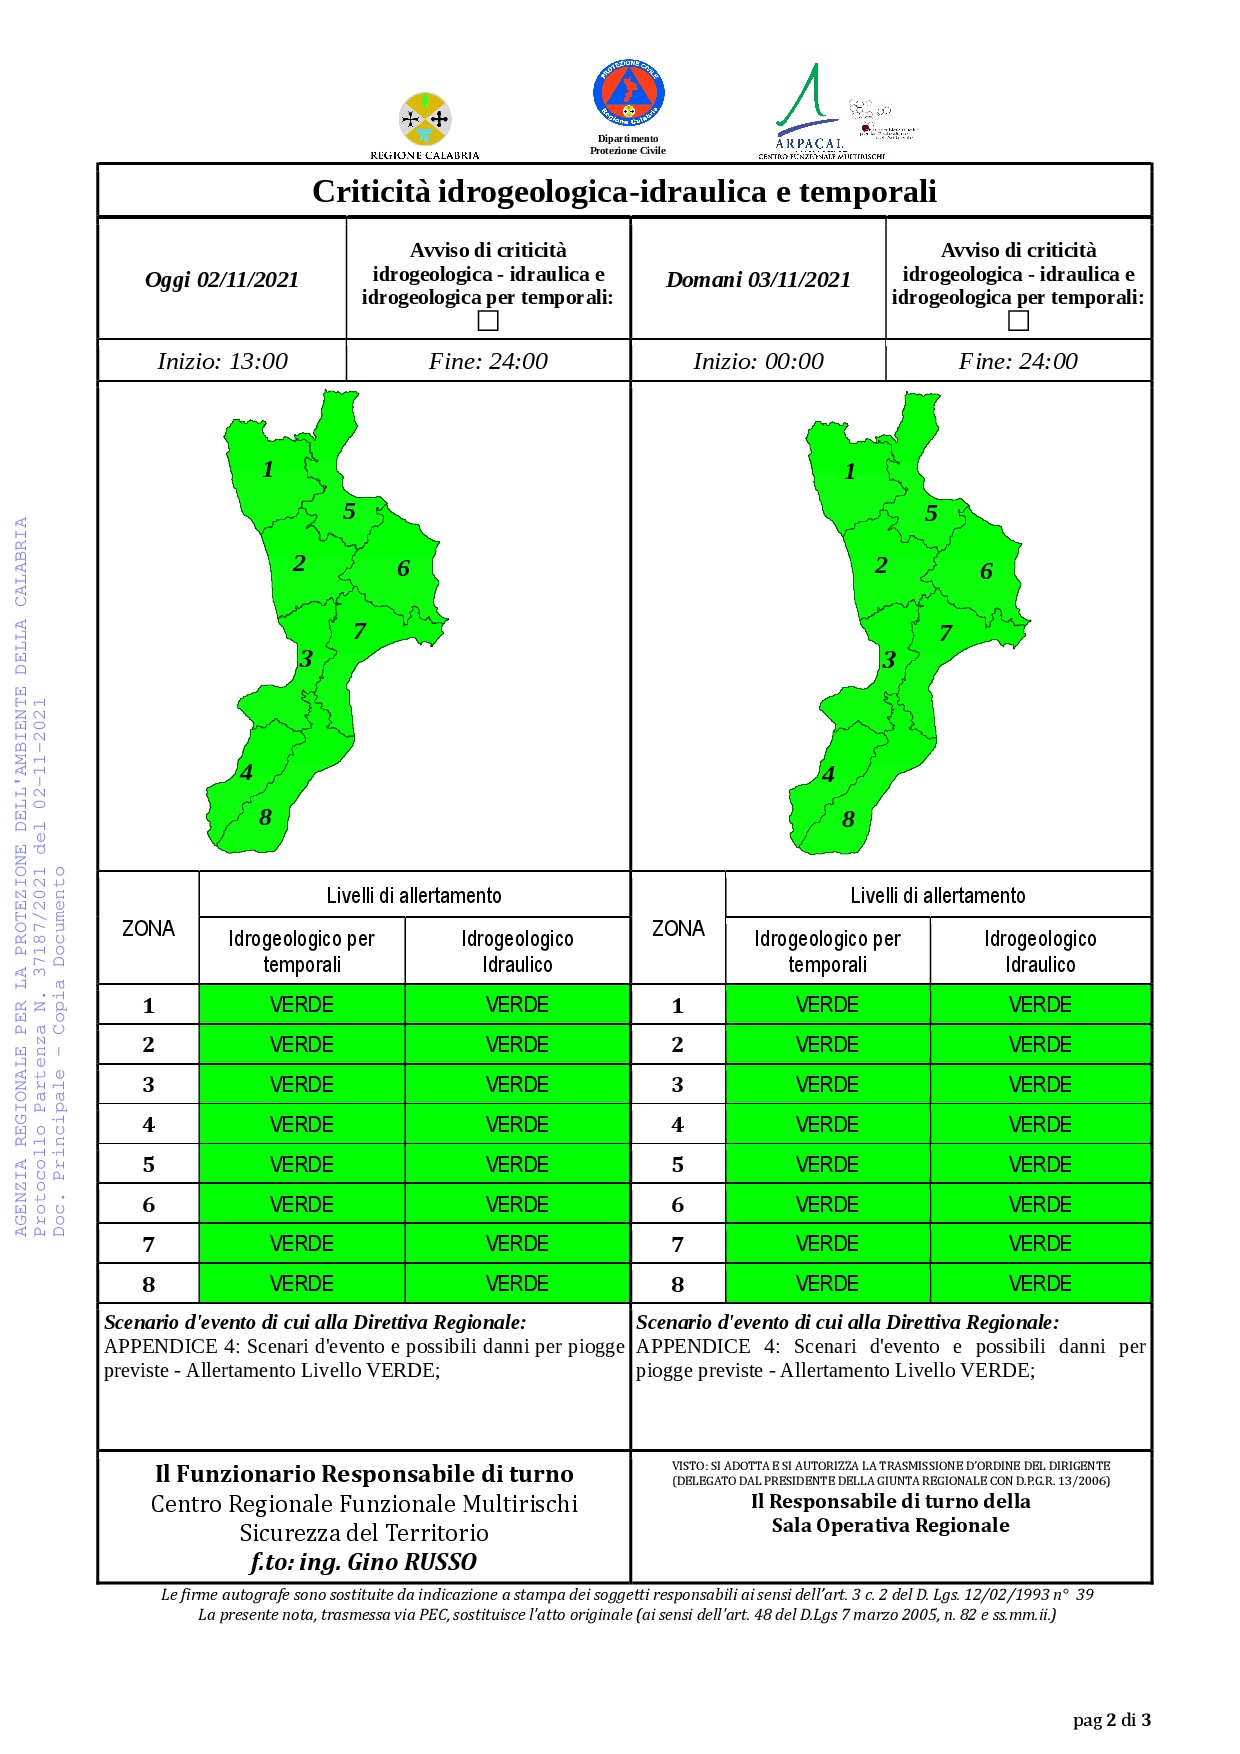 Criticità idrogeologica-idraulica e temporali in Calabria 02-11-2021